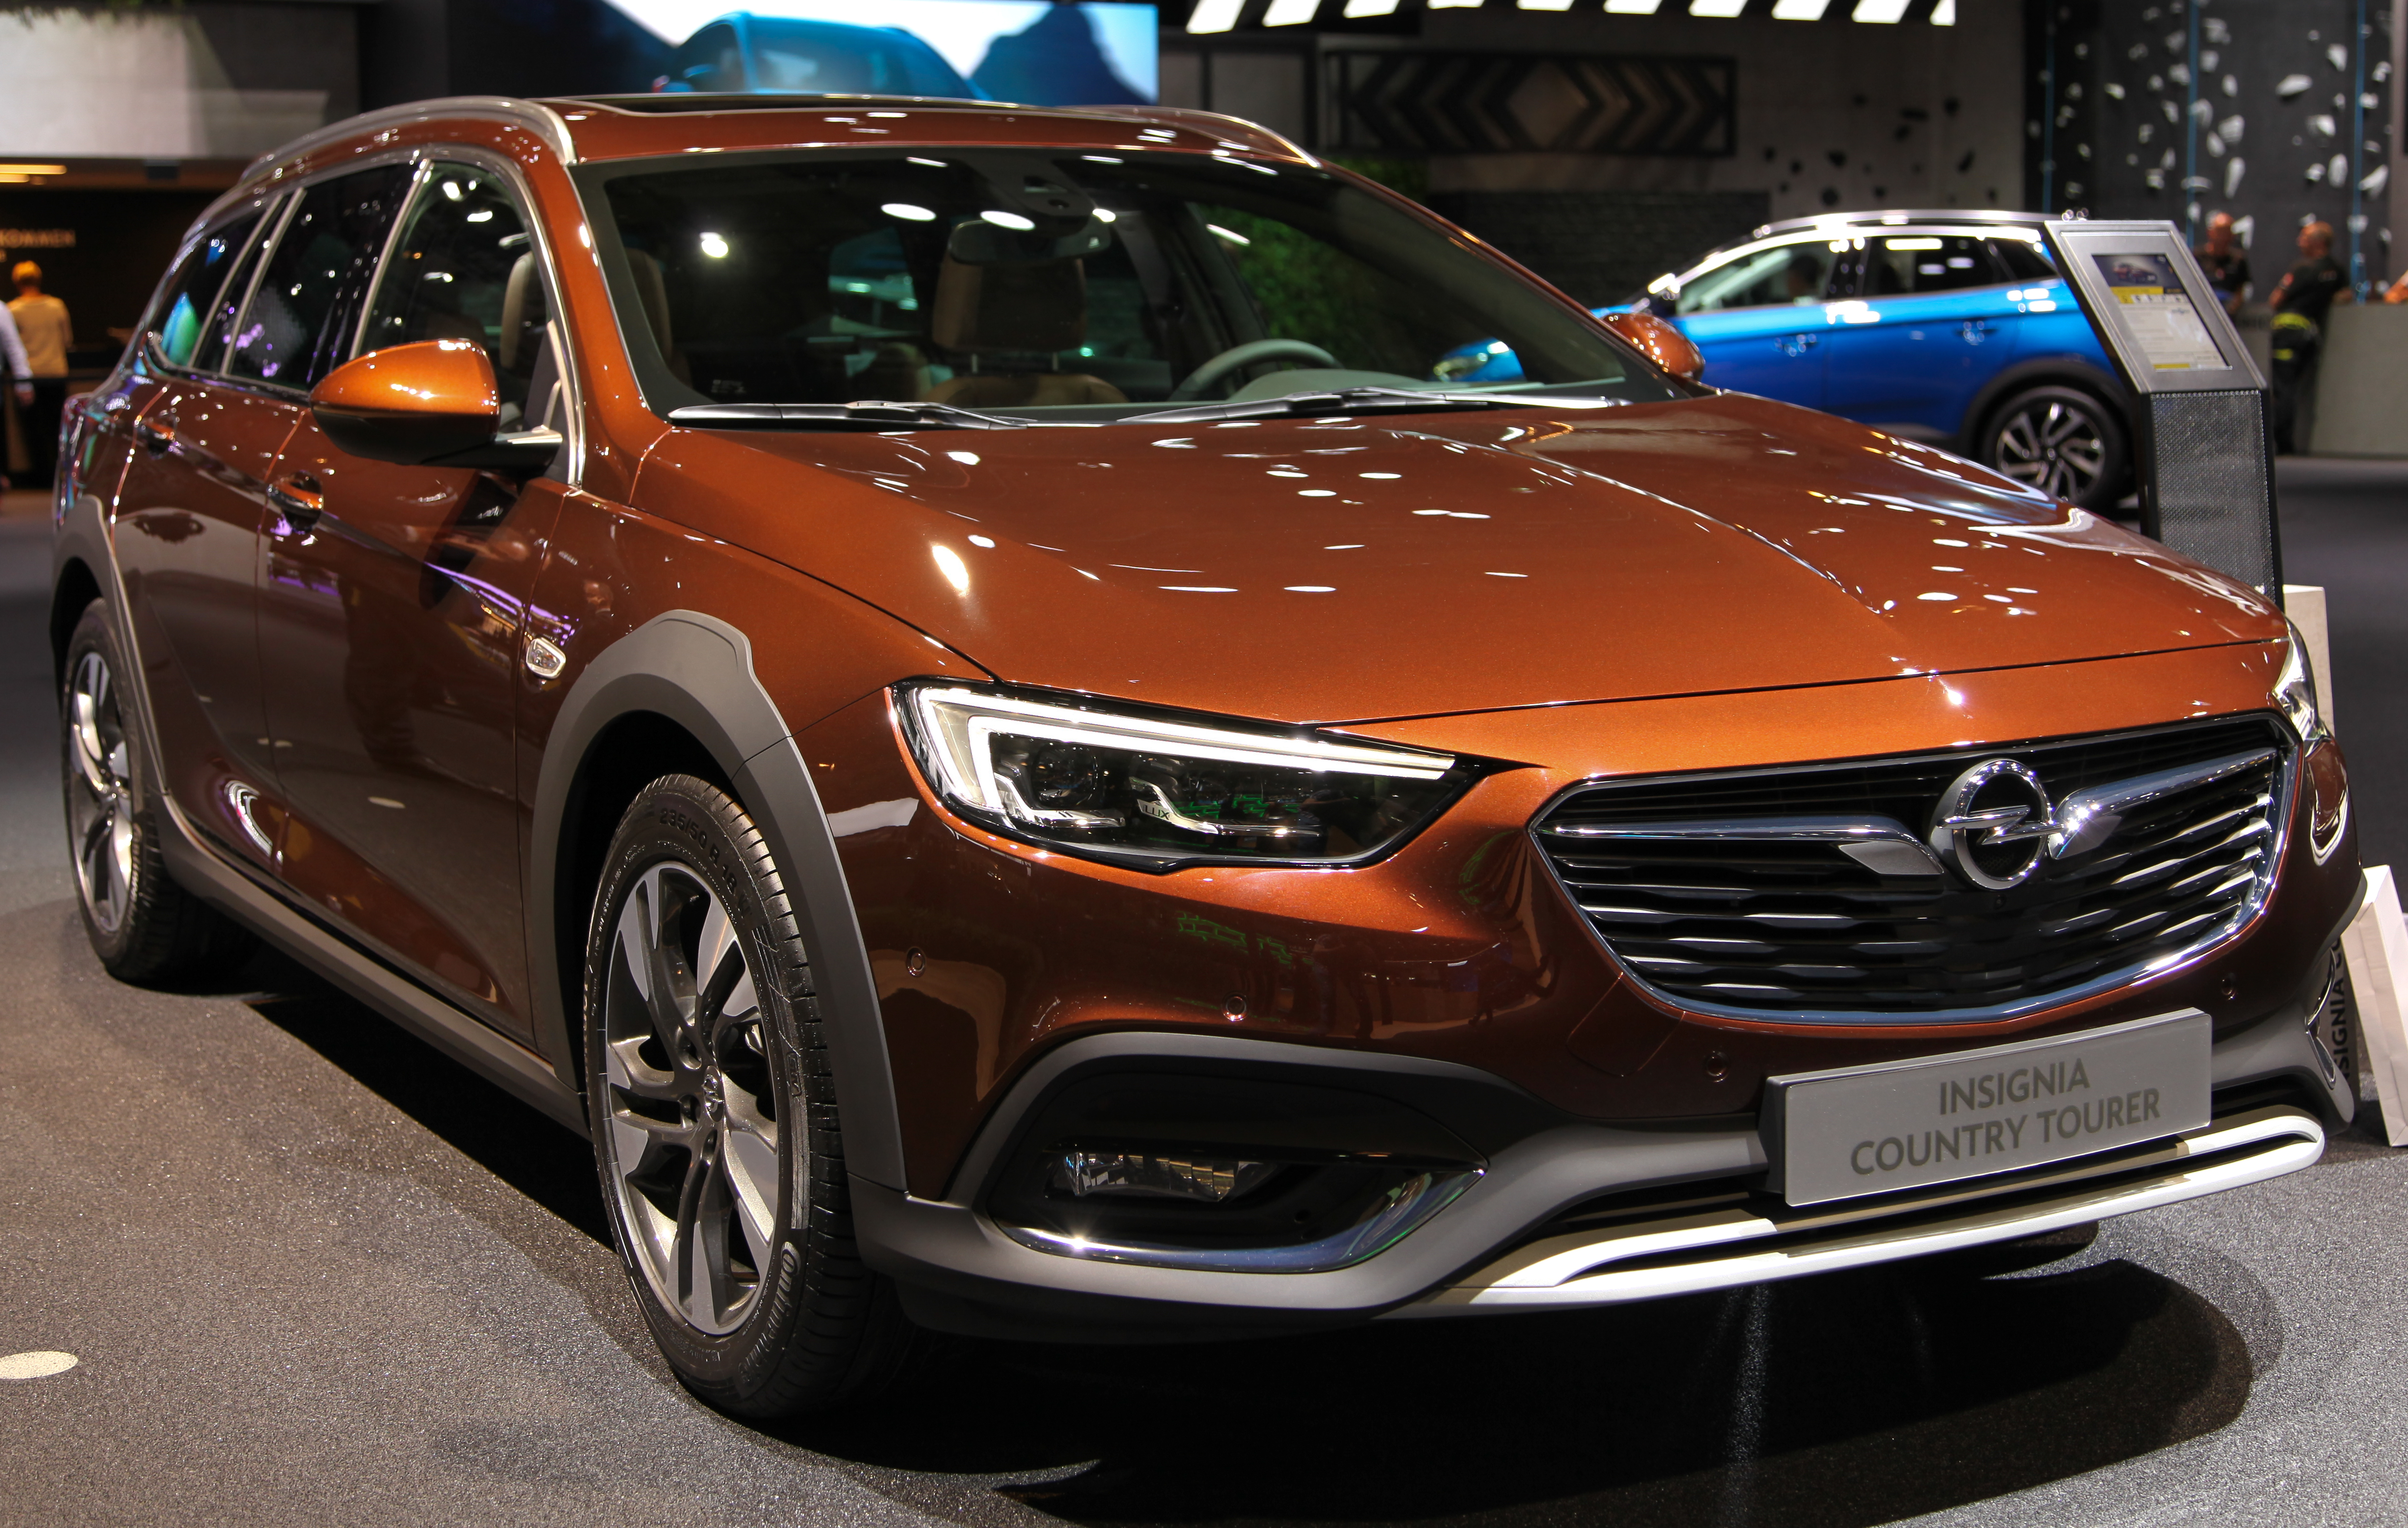 Opel Insignia Country Tourer wagon 2017